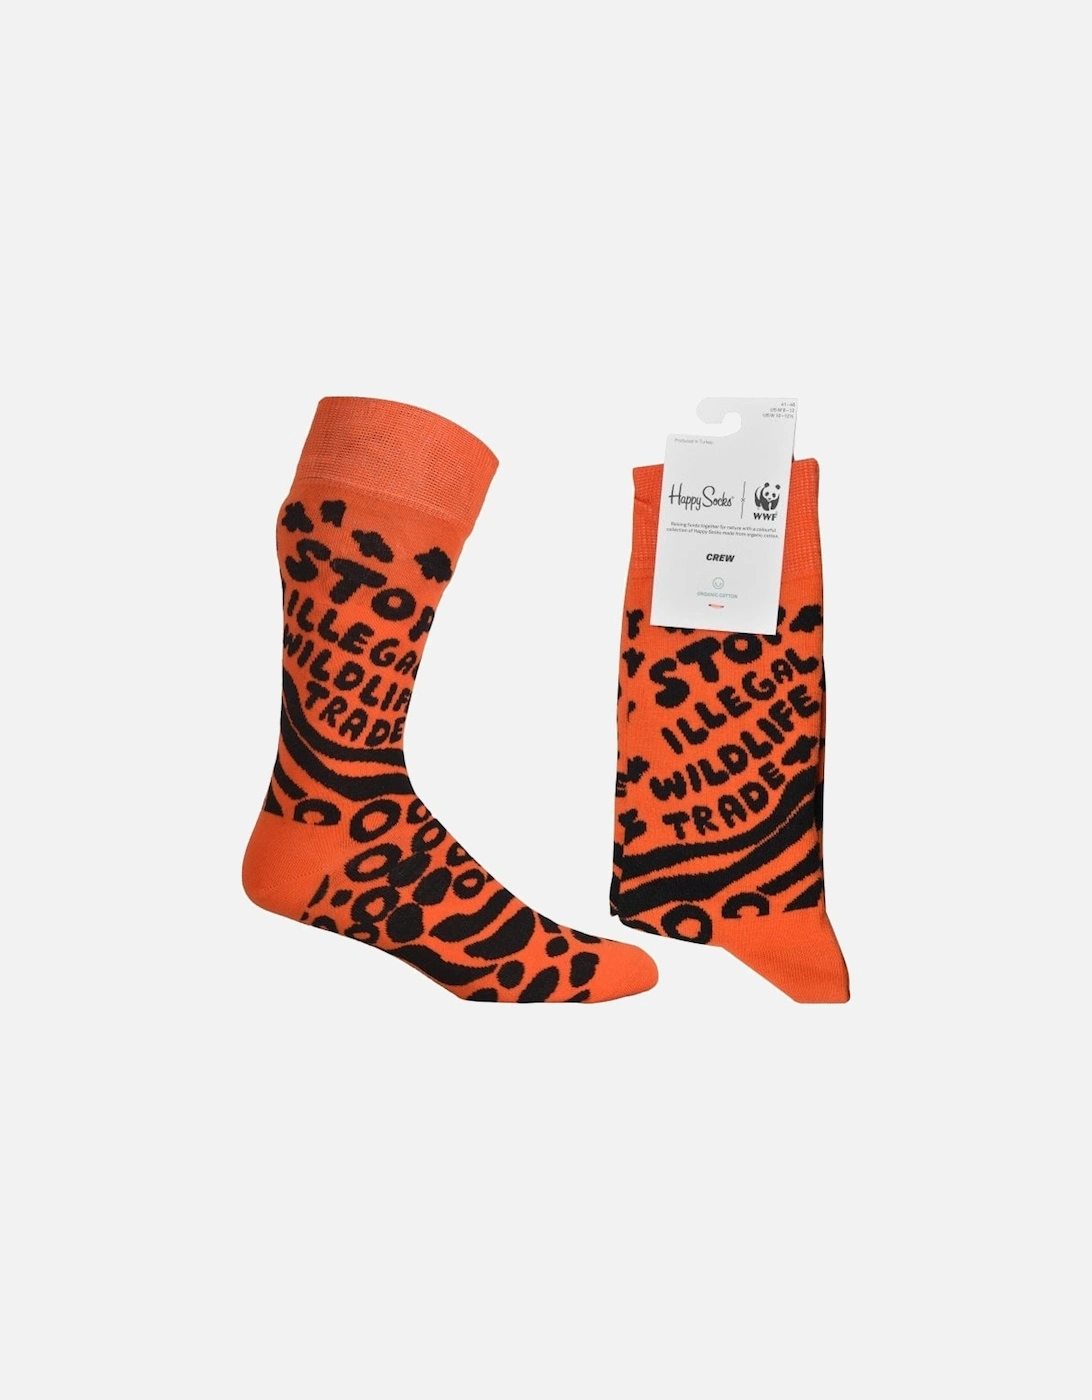 Stop Illegal Wildlife Trade WWF Socks, Orange/black, 4 of 3